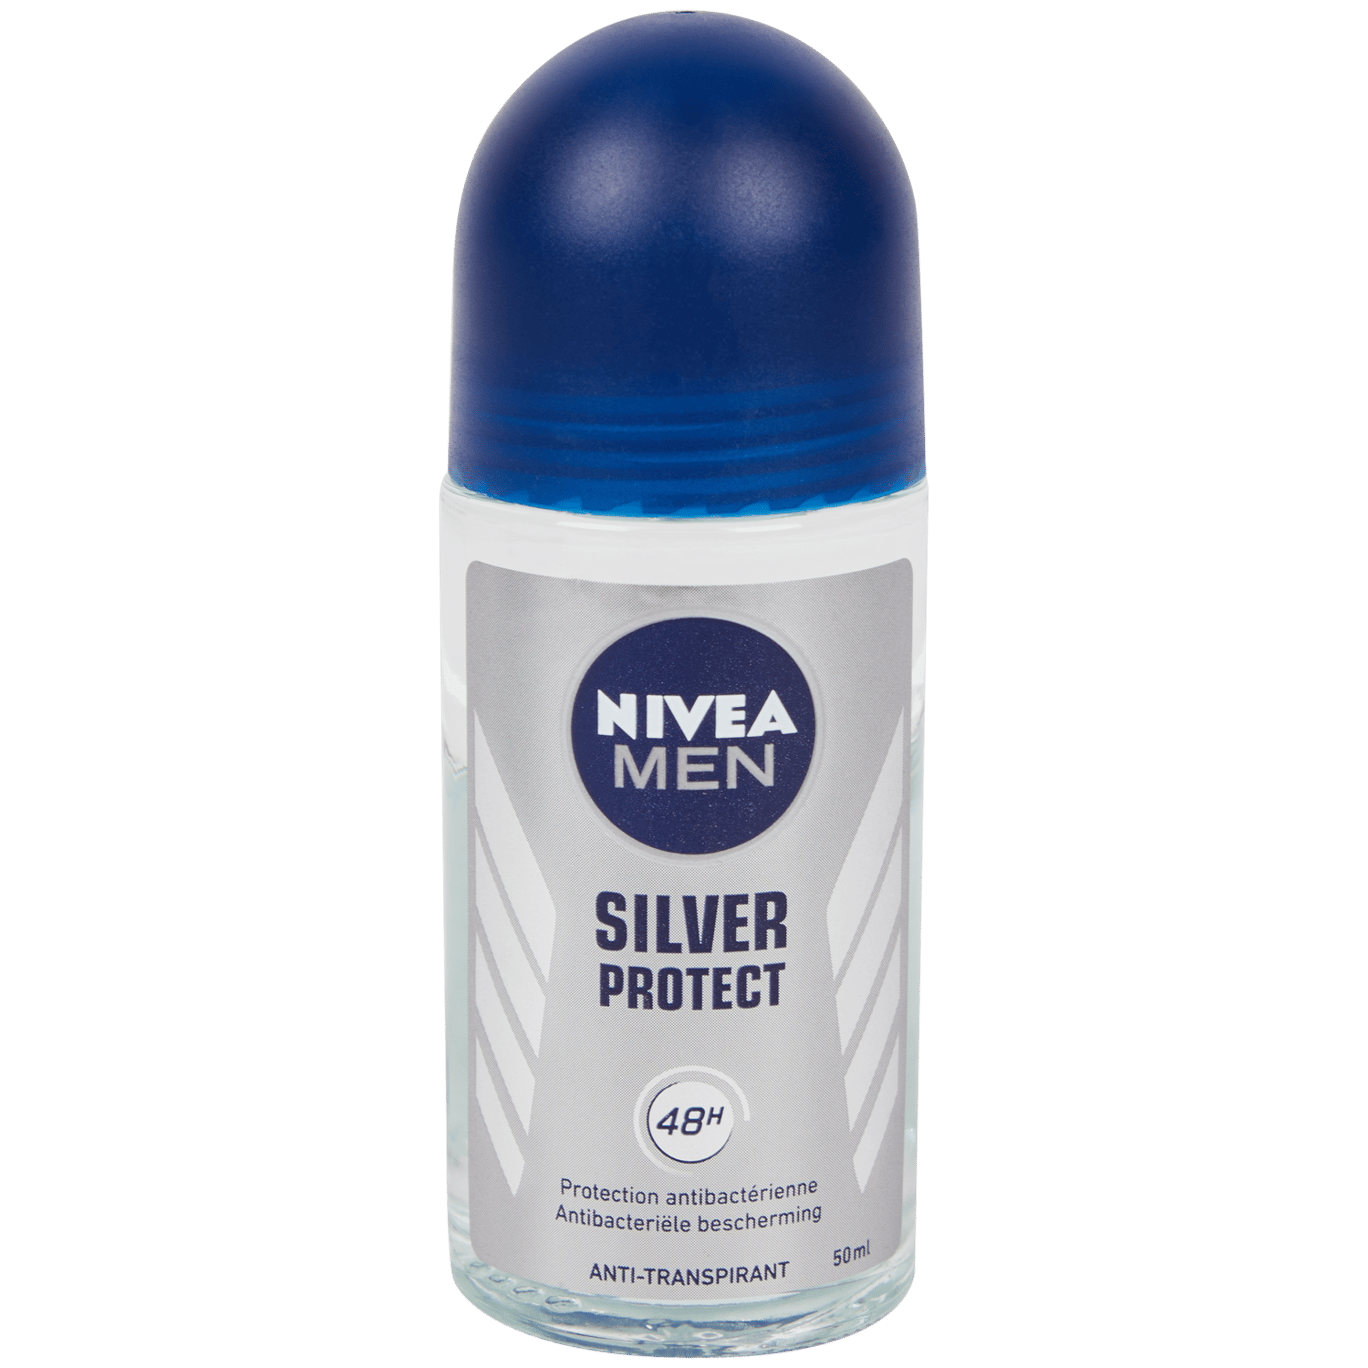 Nivea Men deodorant Silver Protect